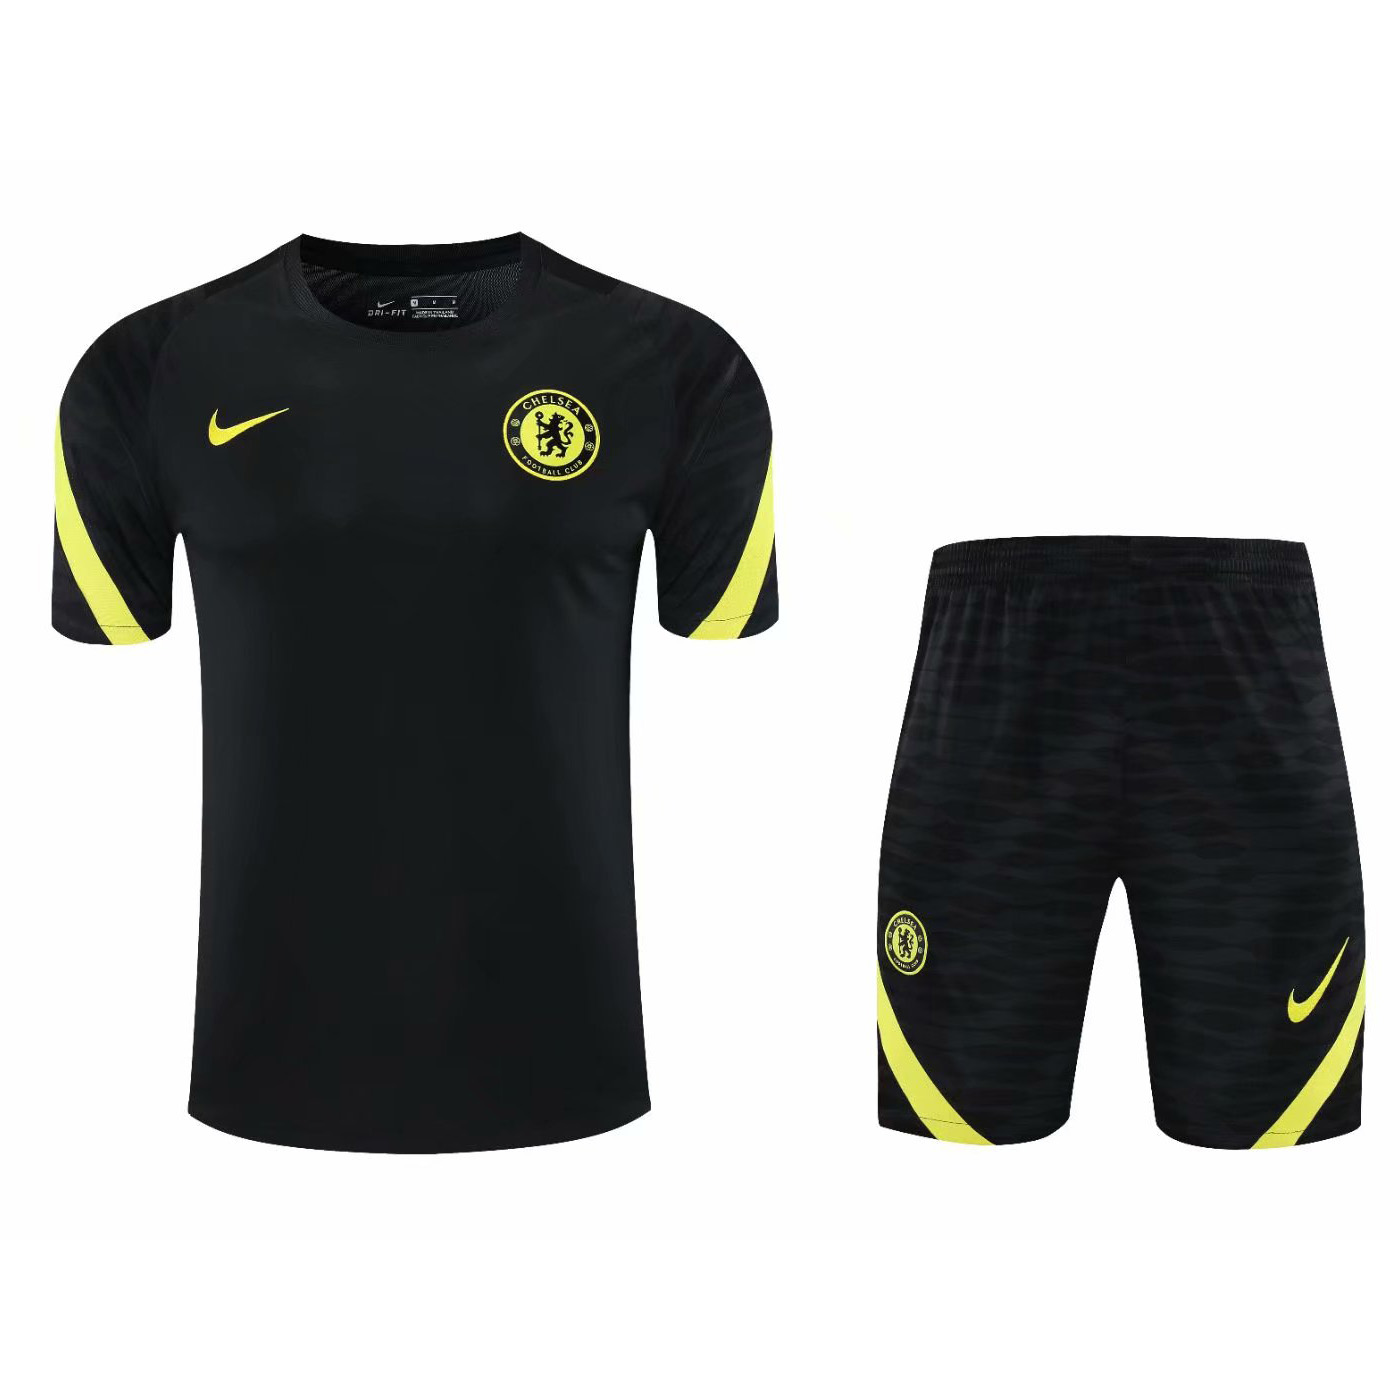 Football Kits, Football Shirts, Training Gear